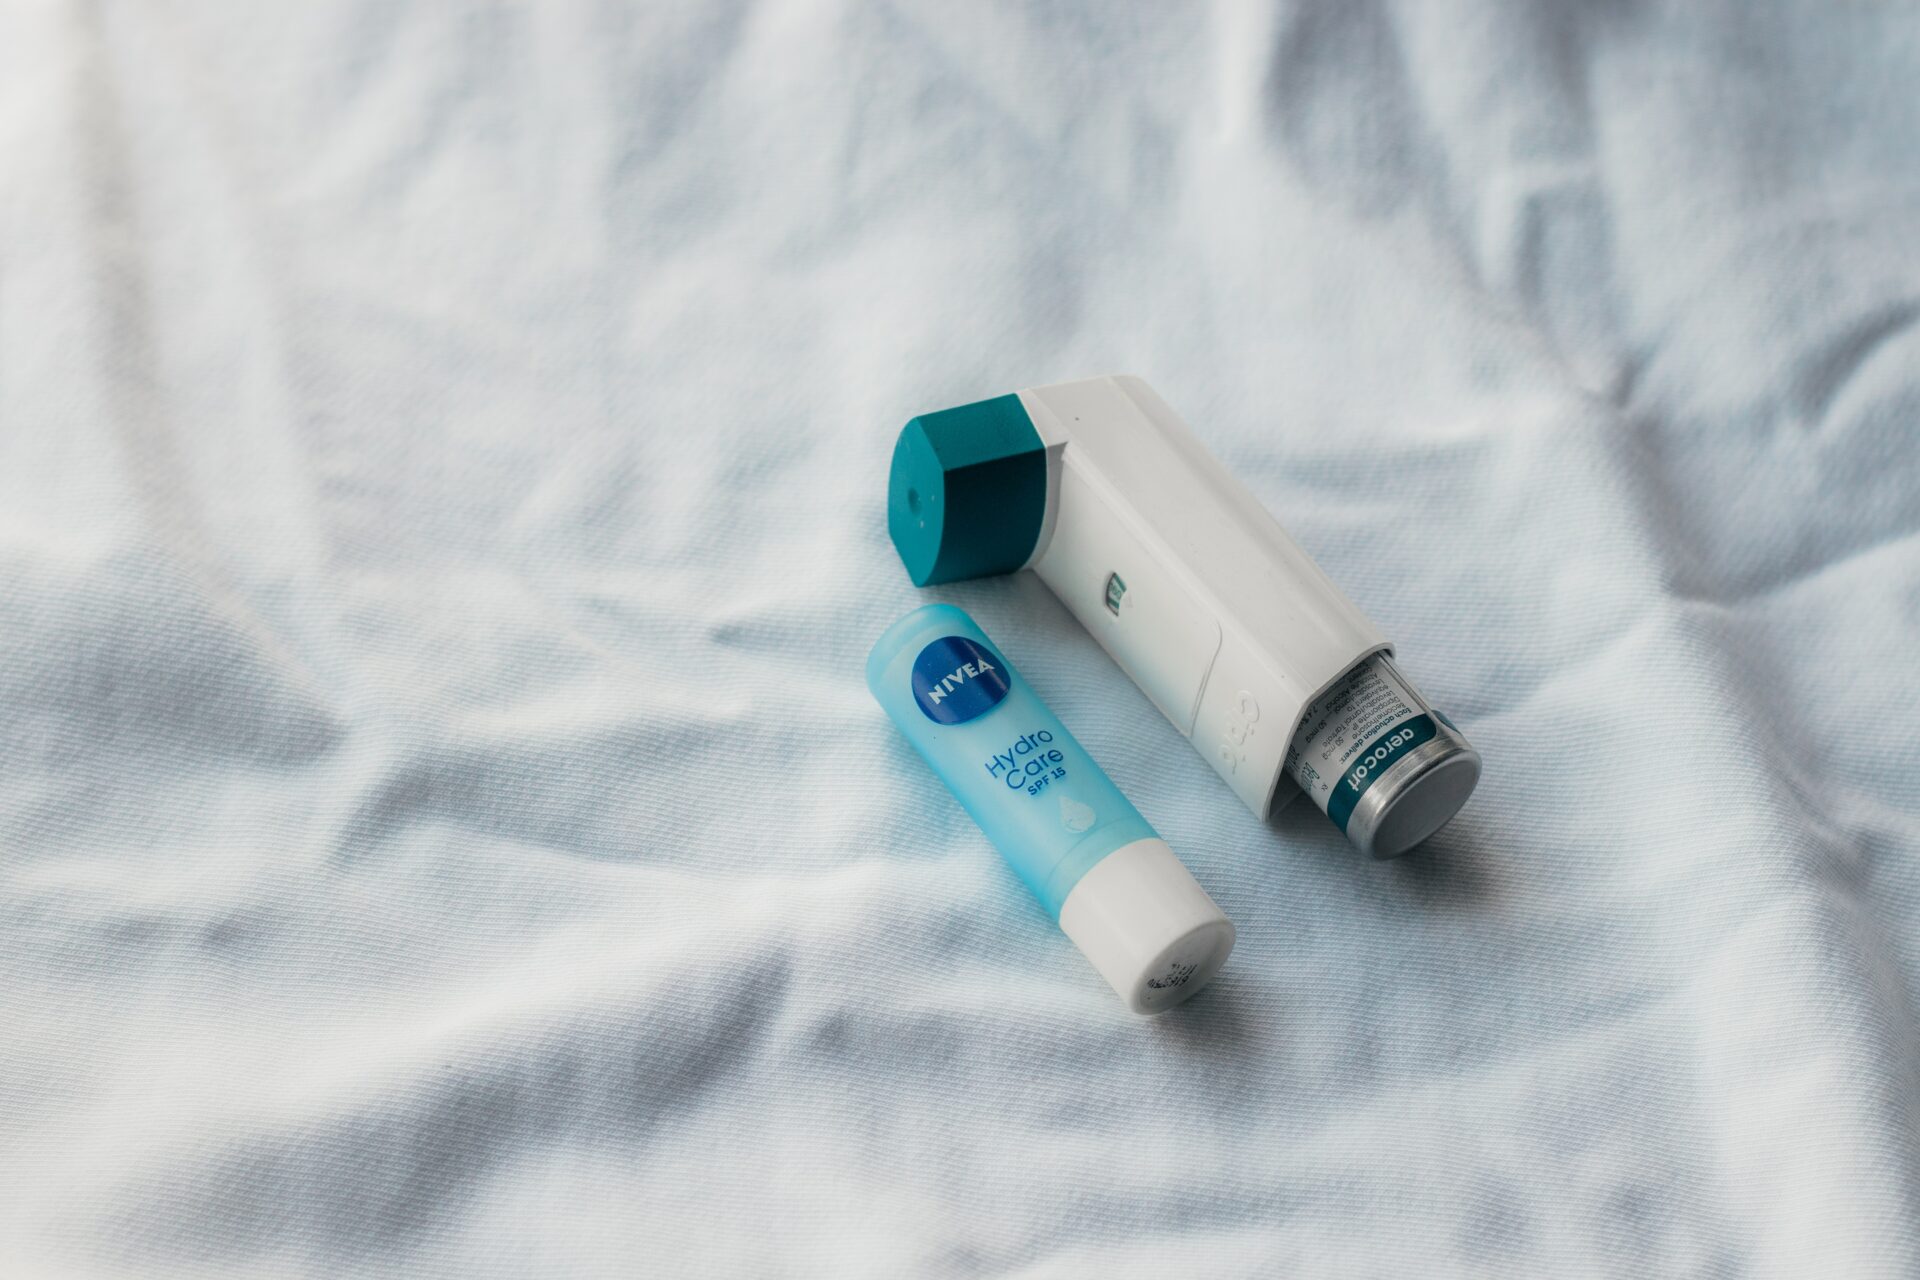 Nivea Hydro-Care lip balm sitting next to an inhaler on a white sheet